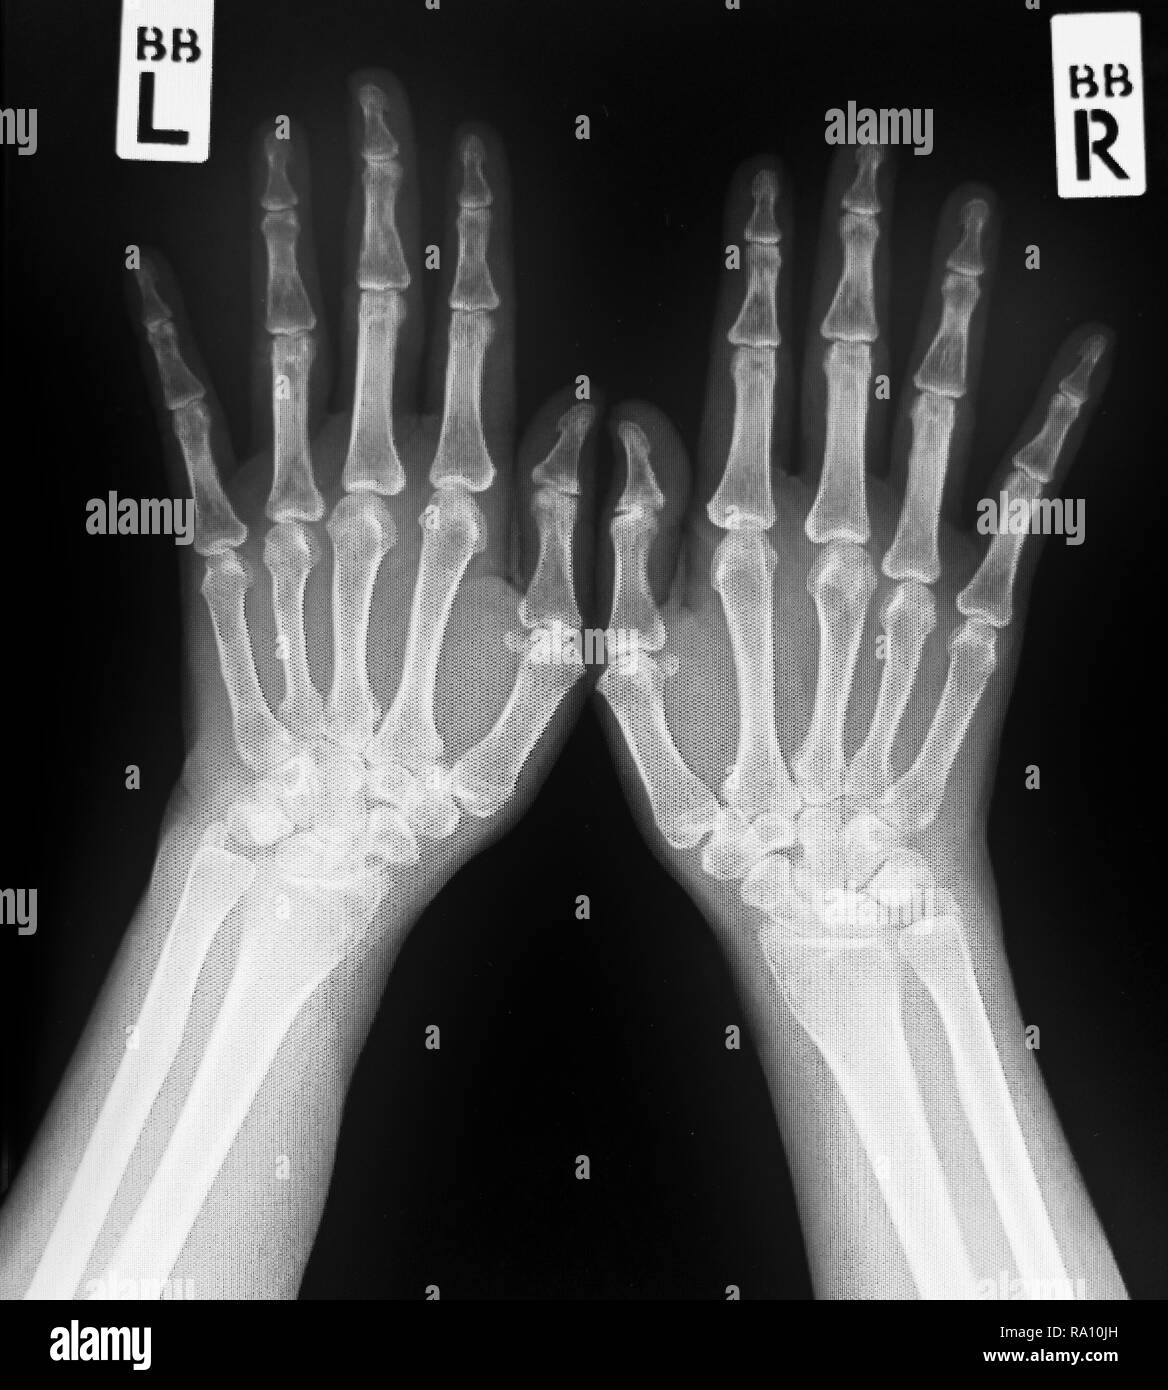 X-ray des deux mains humaines.normal des mains humaines. Banque D'Images